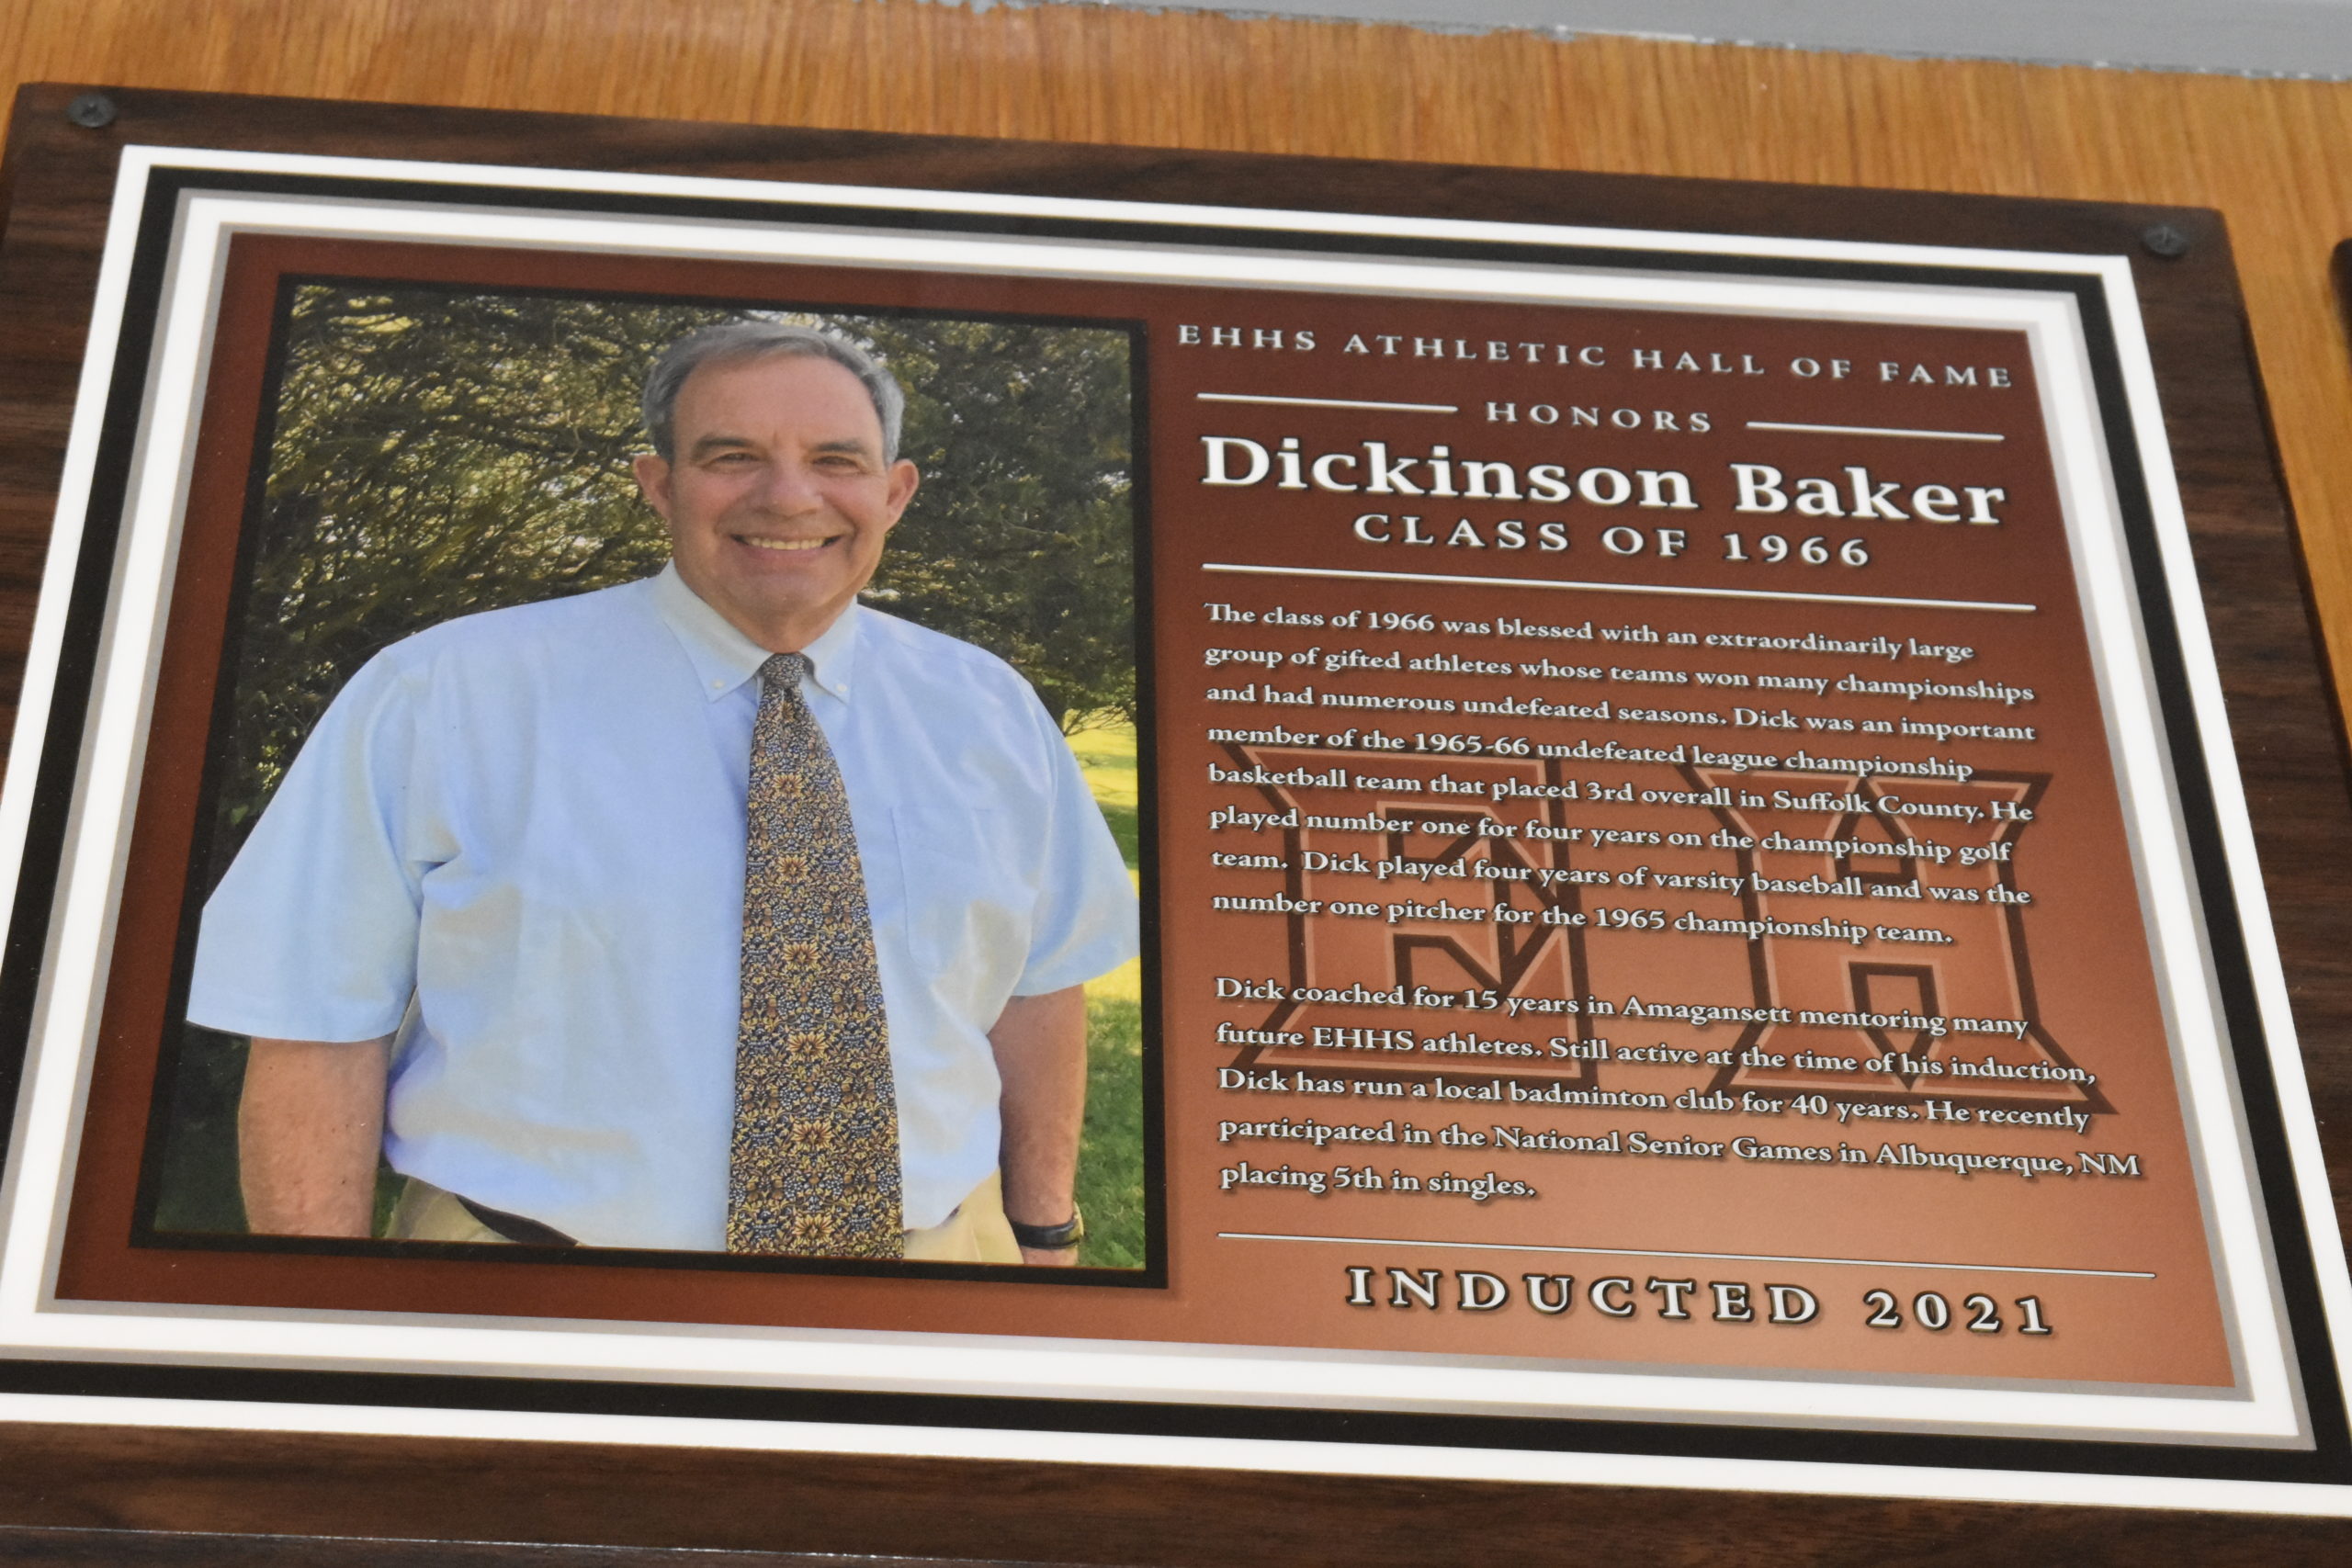 Dickinson Baker's plaque.